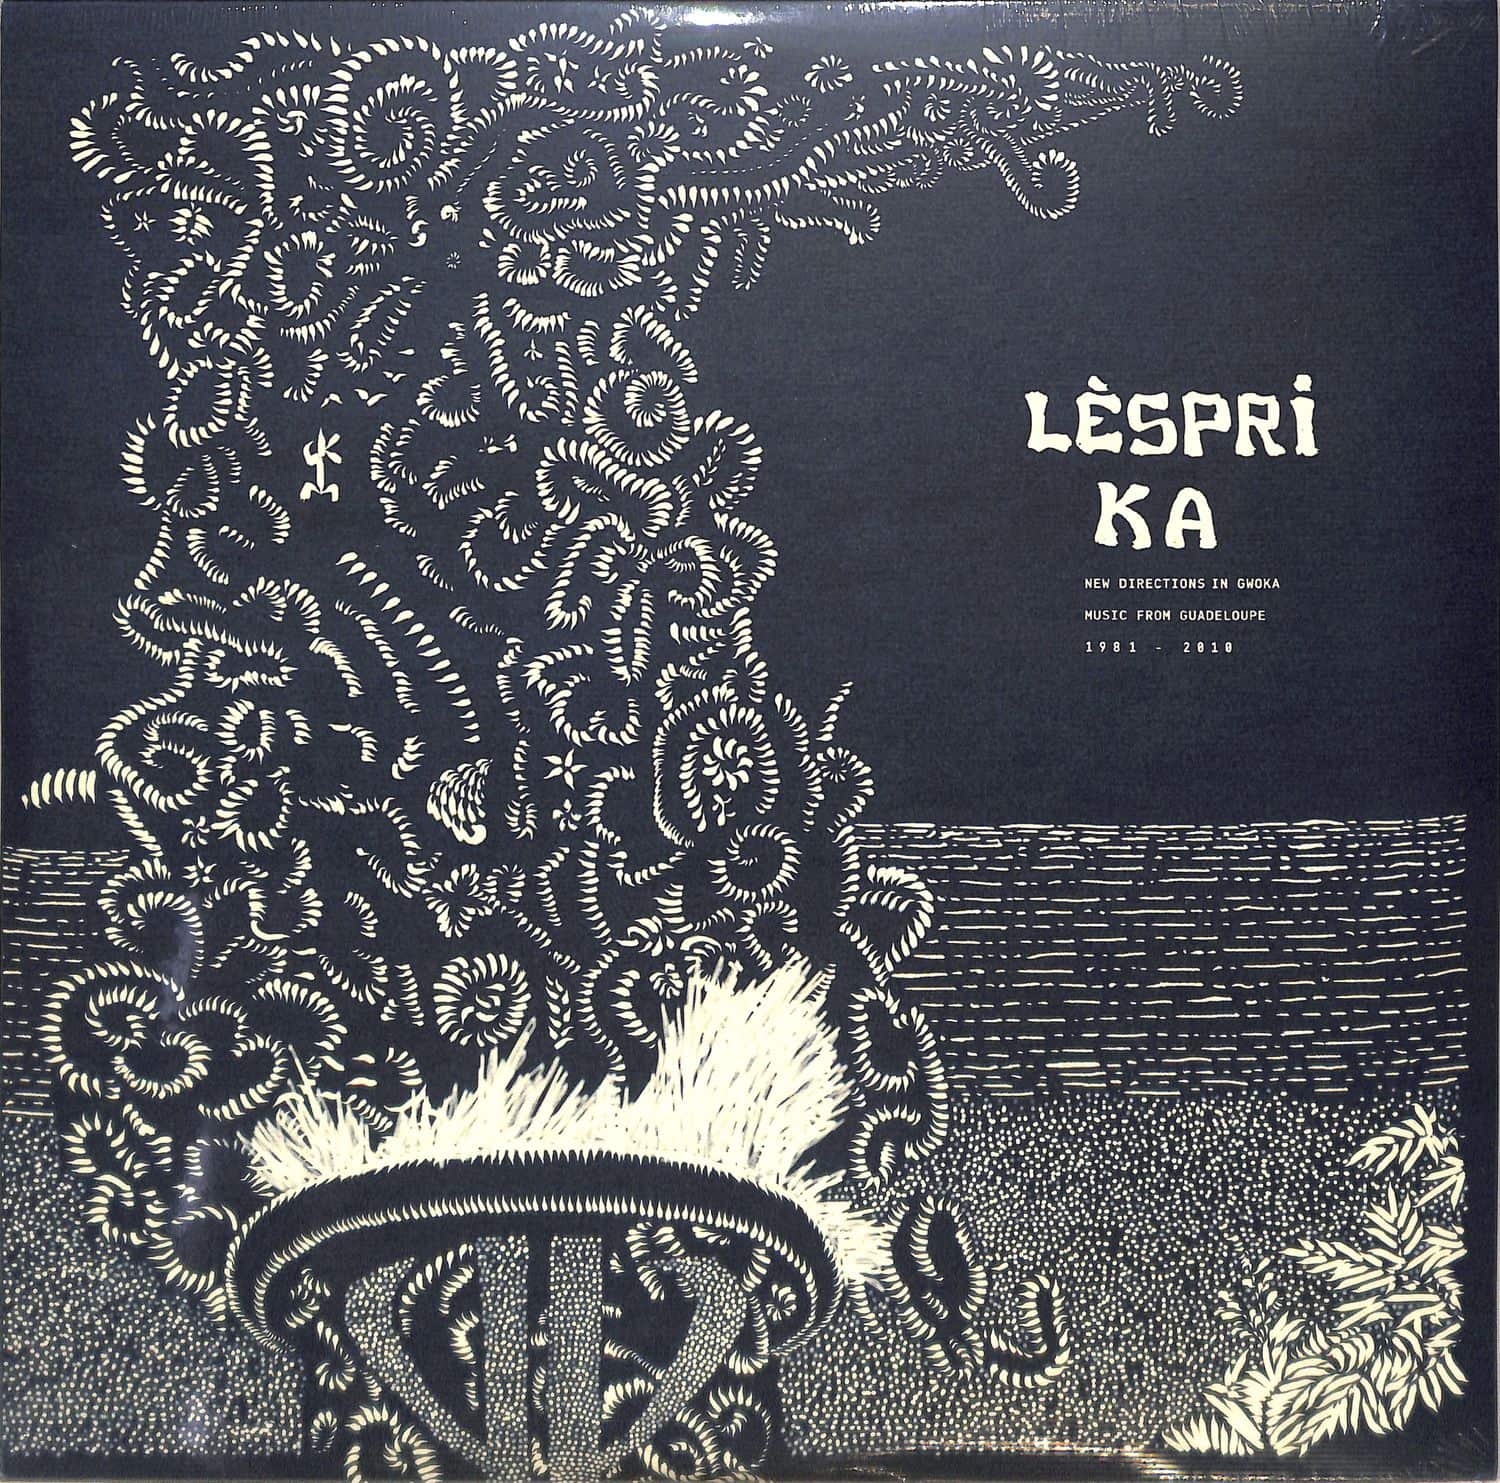 Various Artists - LESPRI KA: GWO KA MUSIC FROM GUADELOUPE 